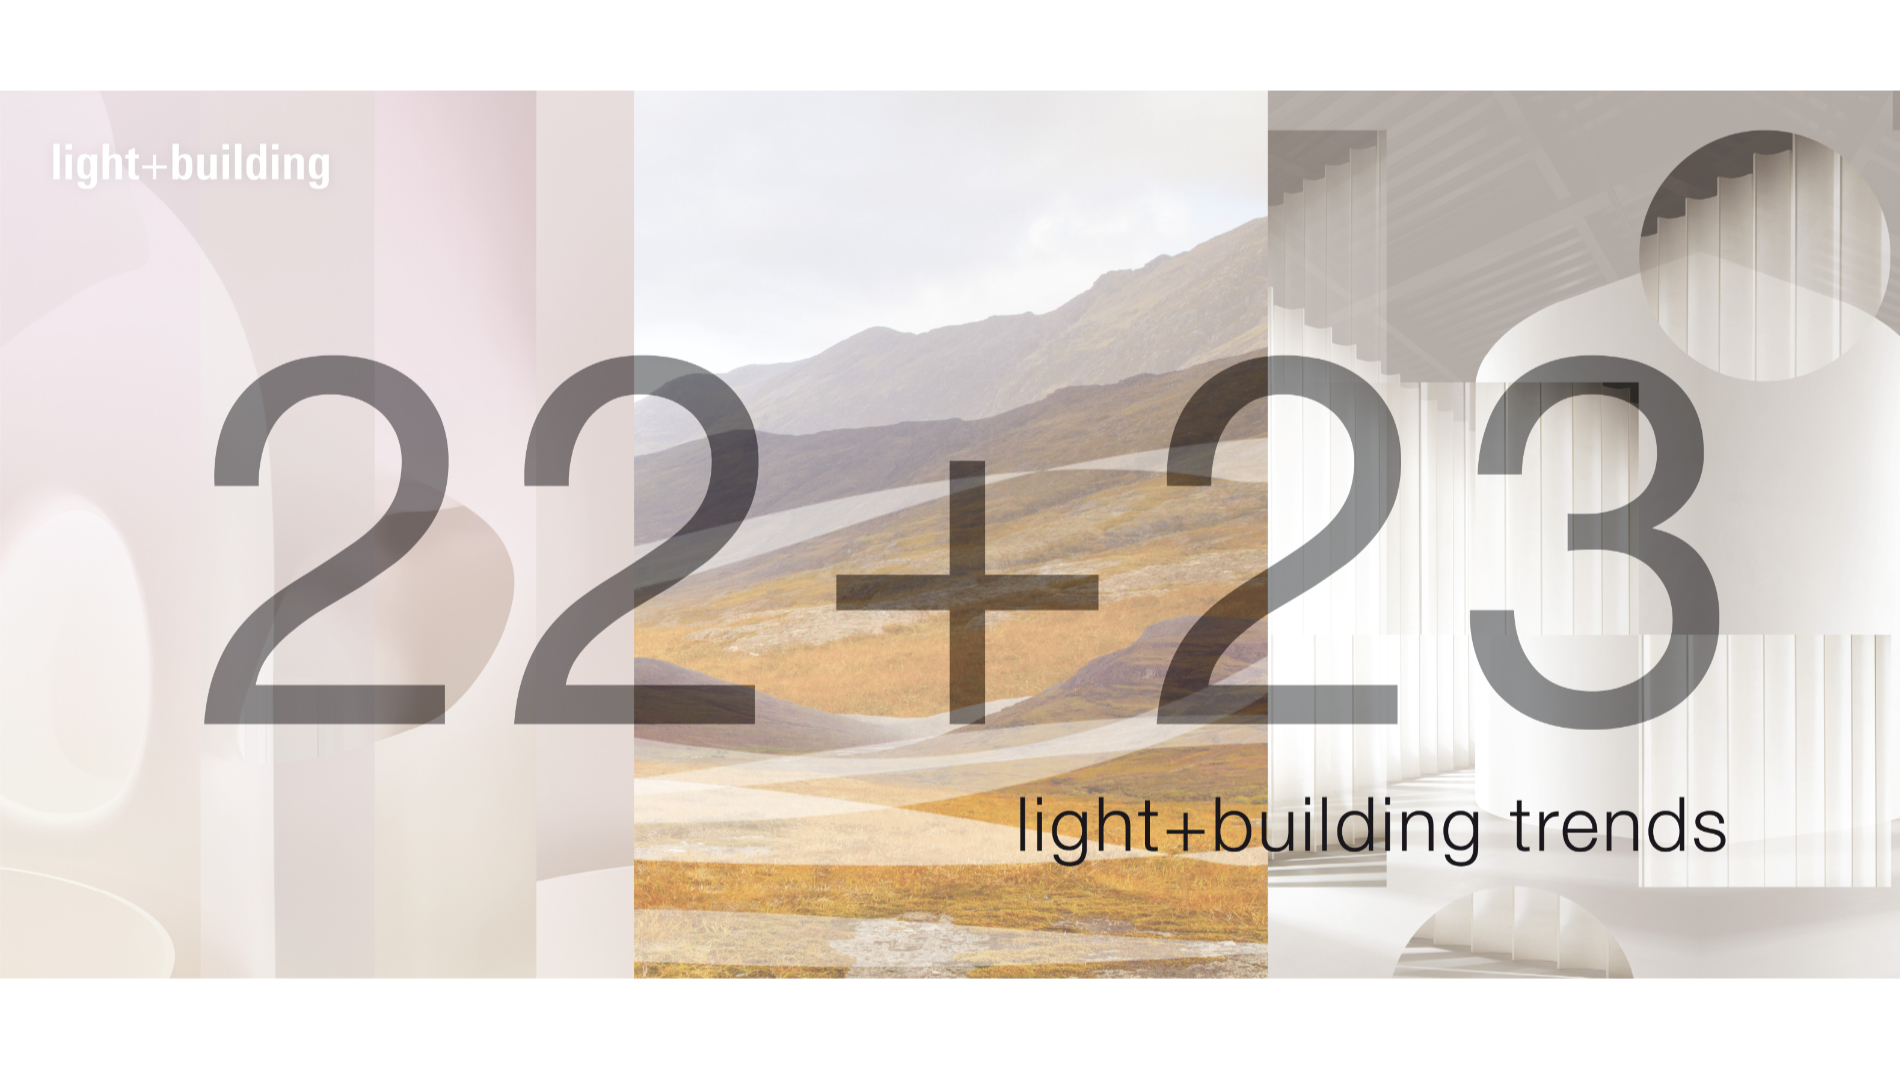 Light + Building Trends 22+23